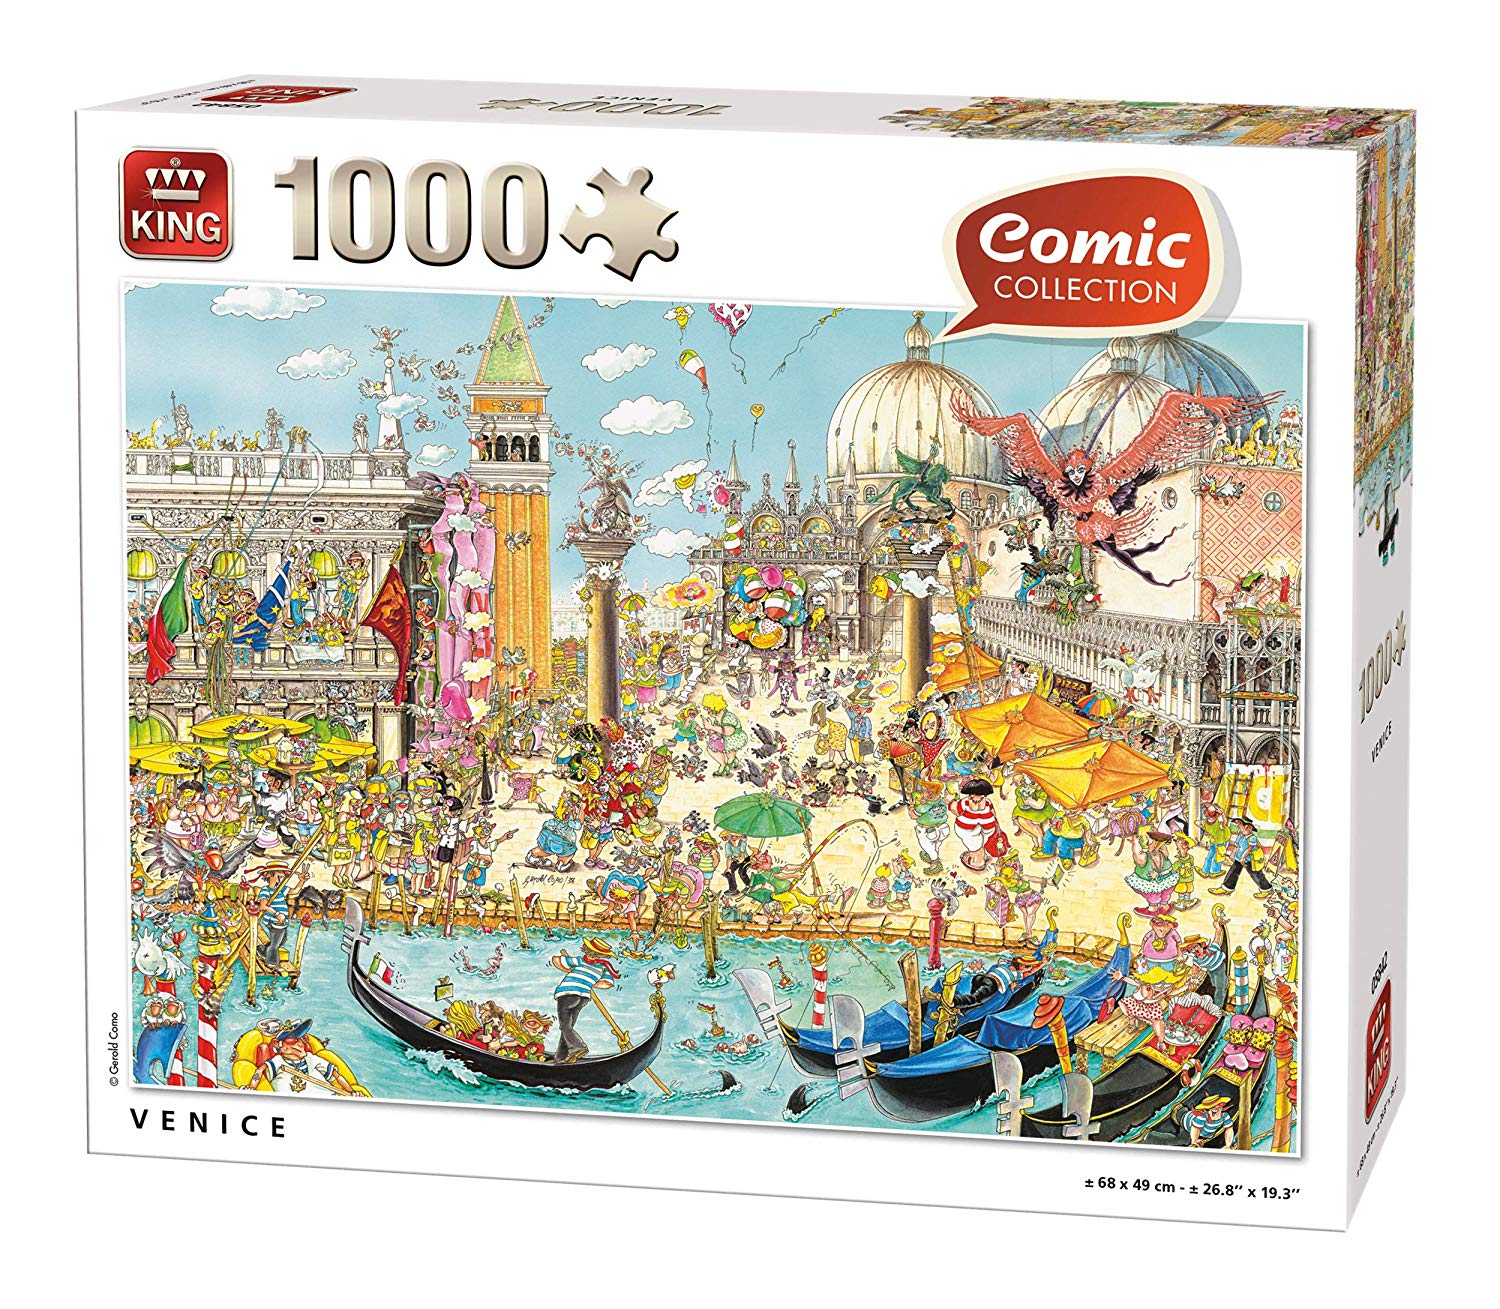 King 55842 Cartoon Venice Jigsaw Puzzle 1,000 Pieces 68 x 49 cm Full Colour